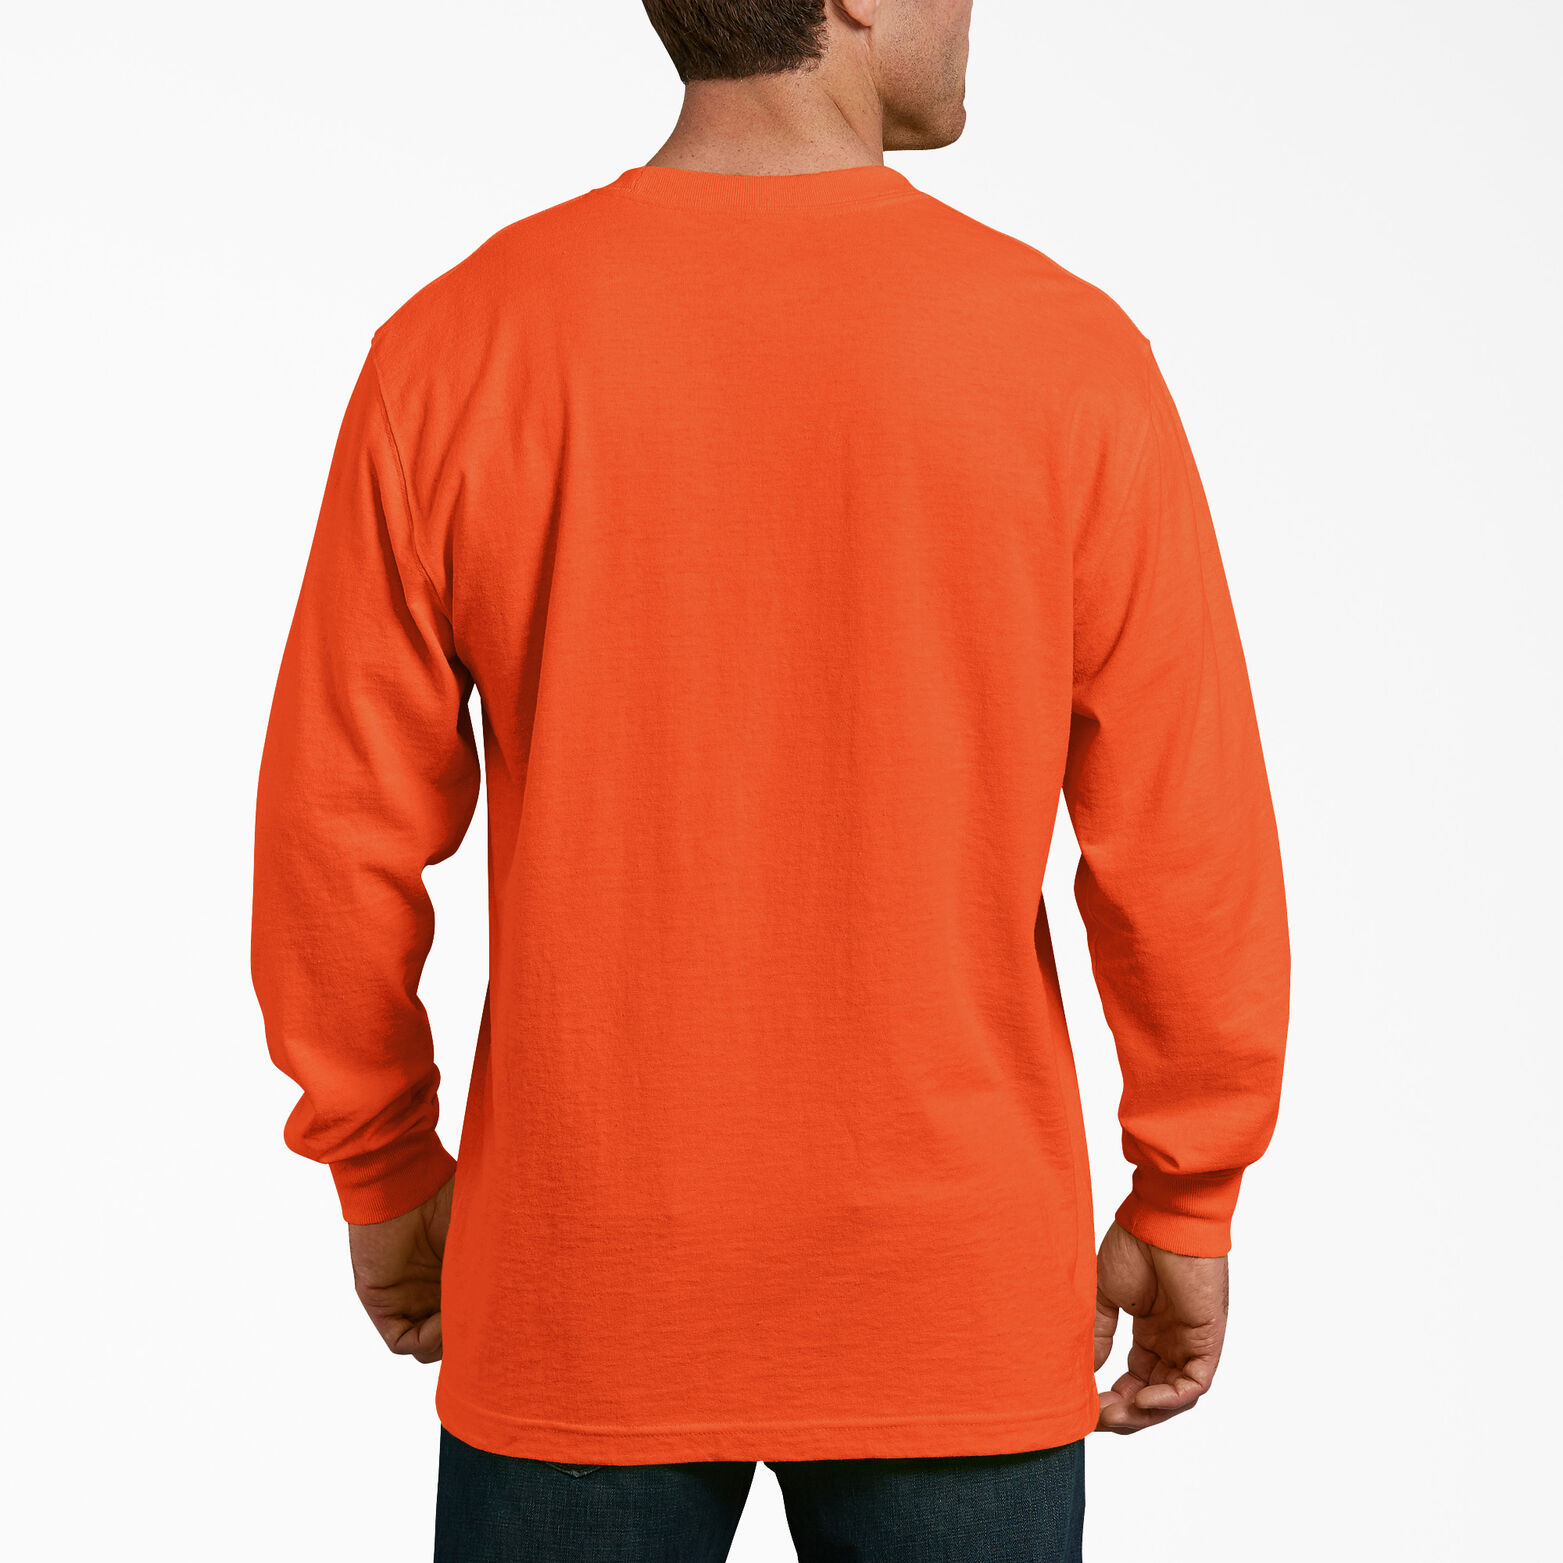 long sleeve neon work shirts Sleeve long orange shirt men shirts neon ...